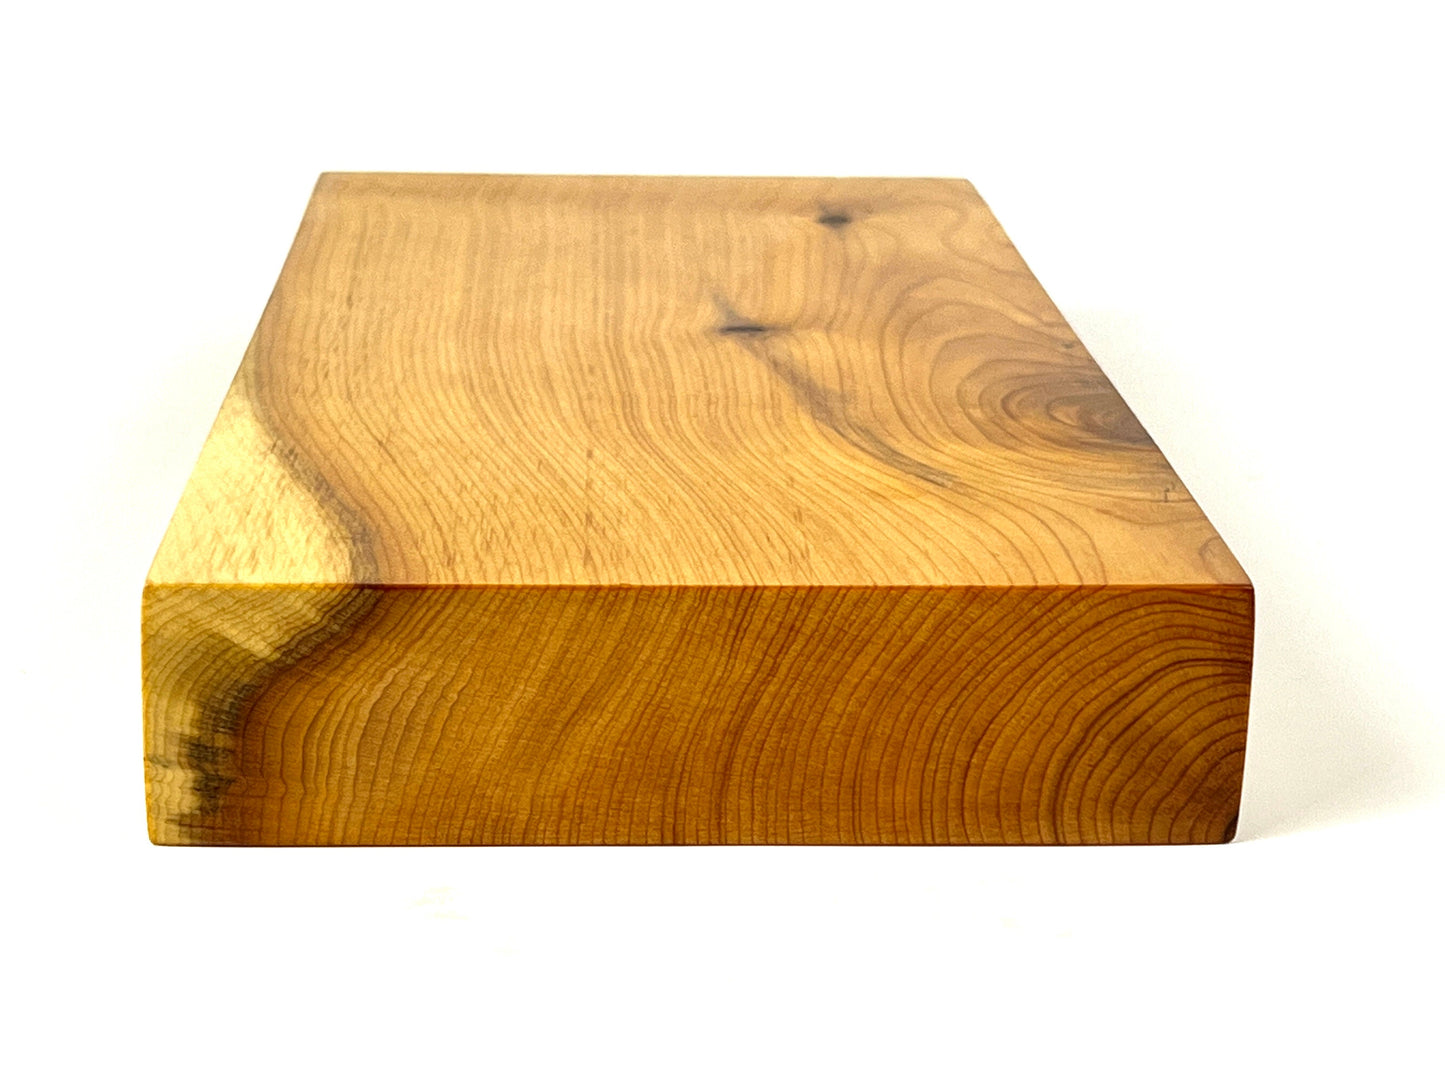 Cornish Yew 28x14cm Chopping Board